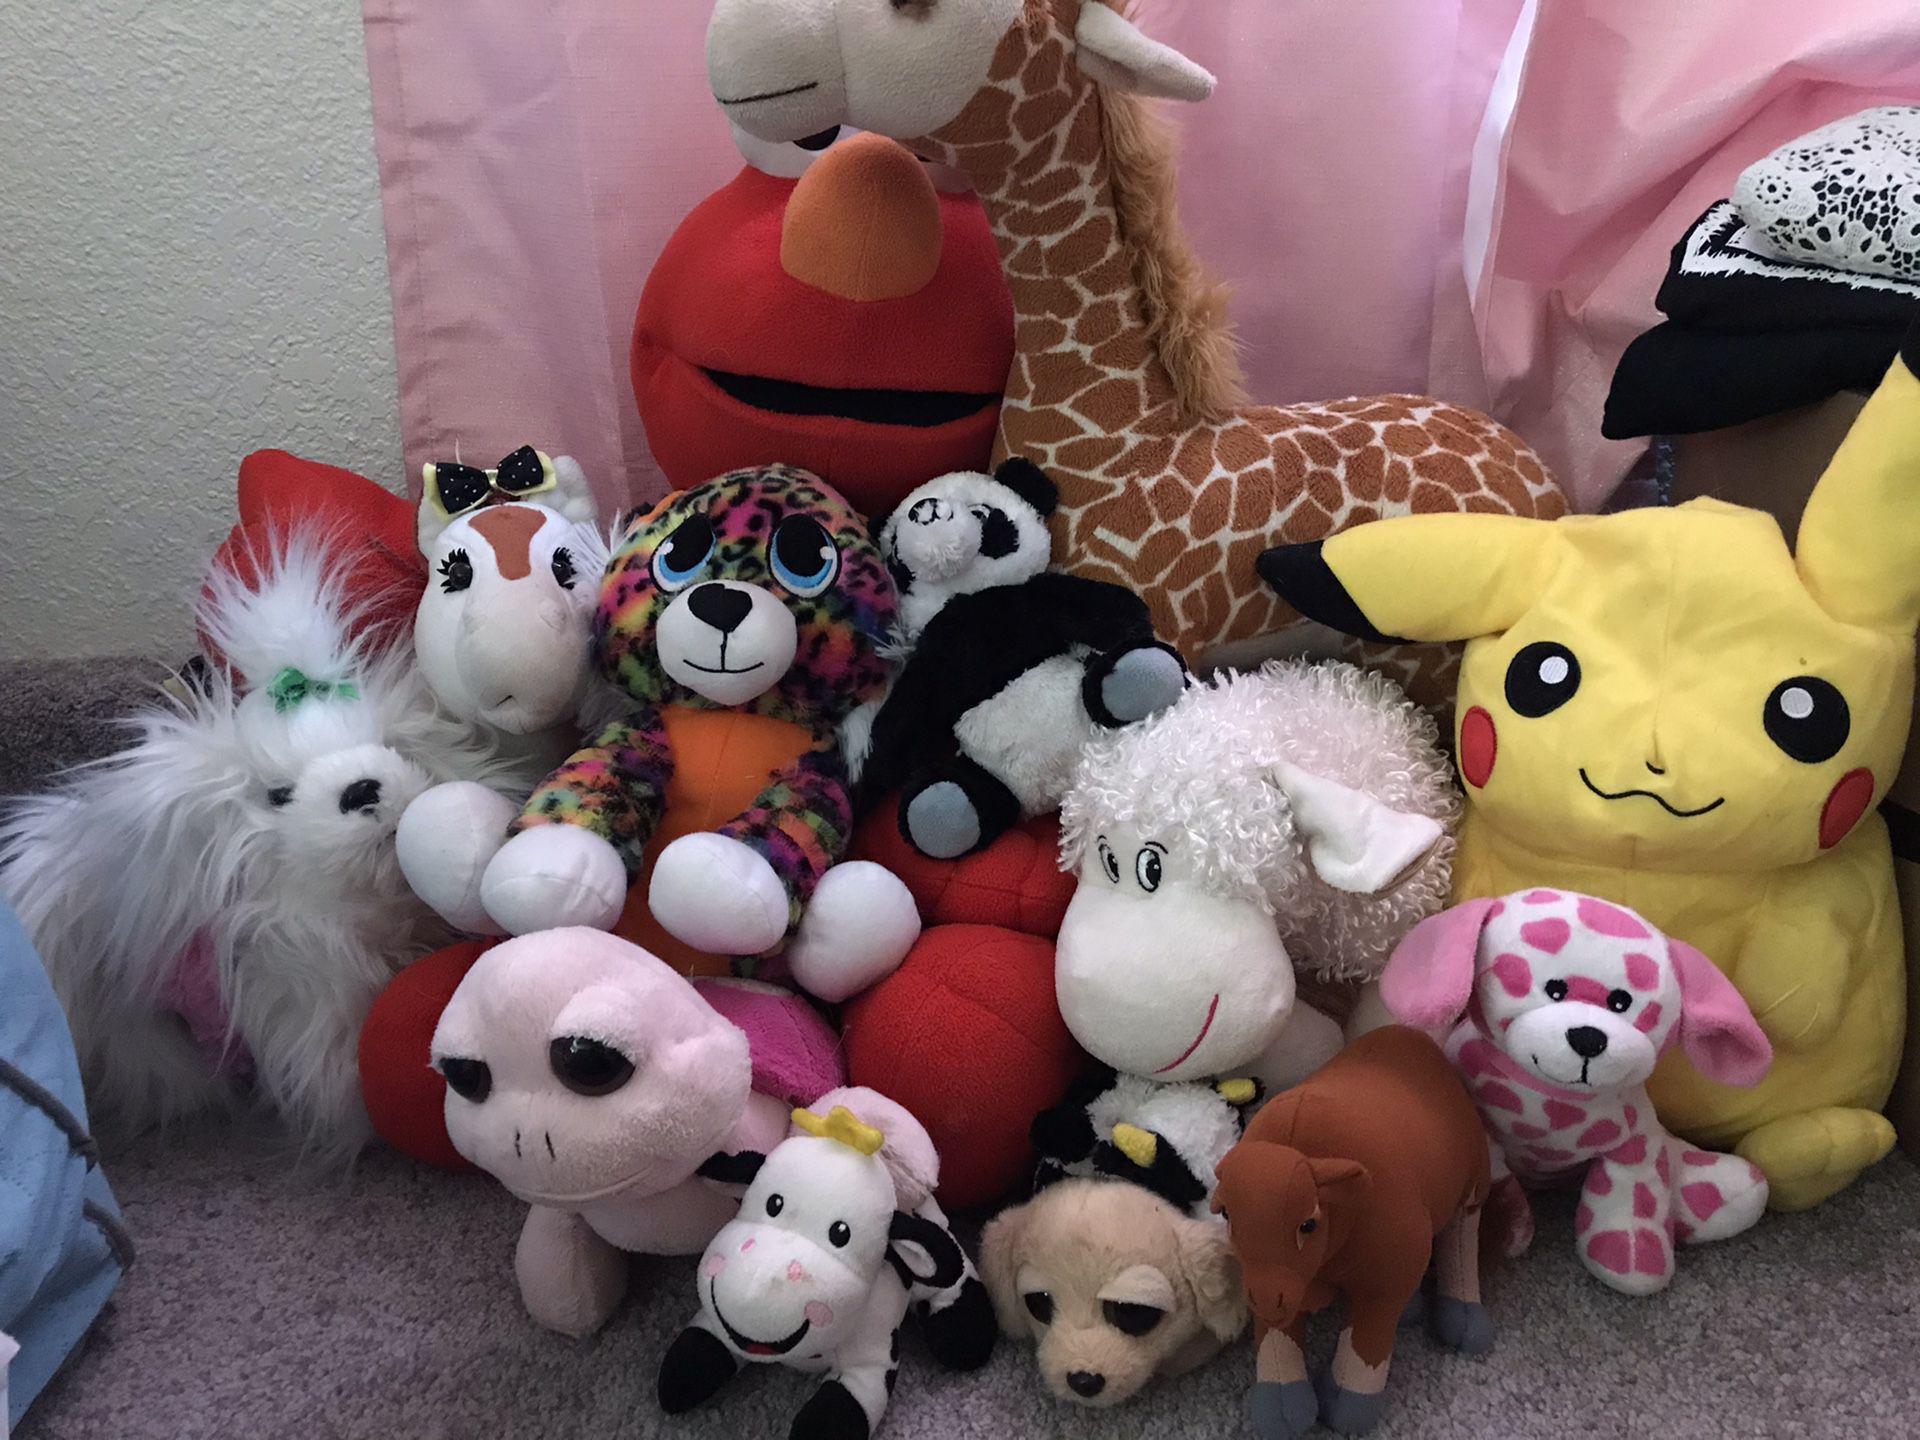 Free stuffed animals